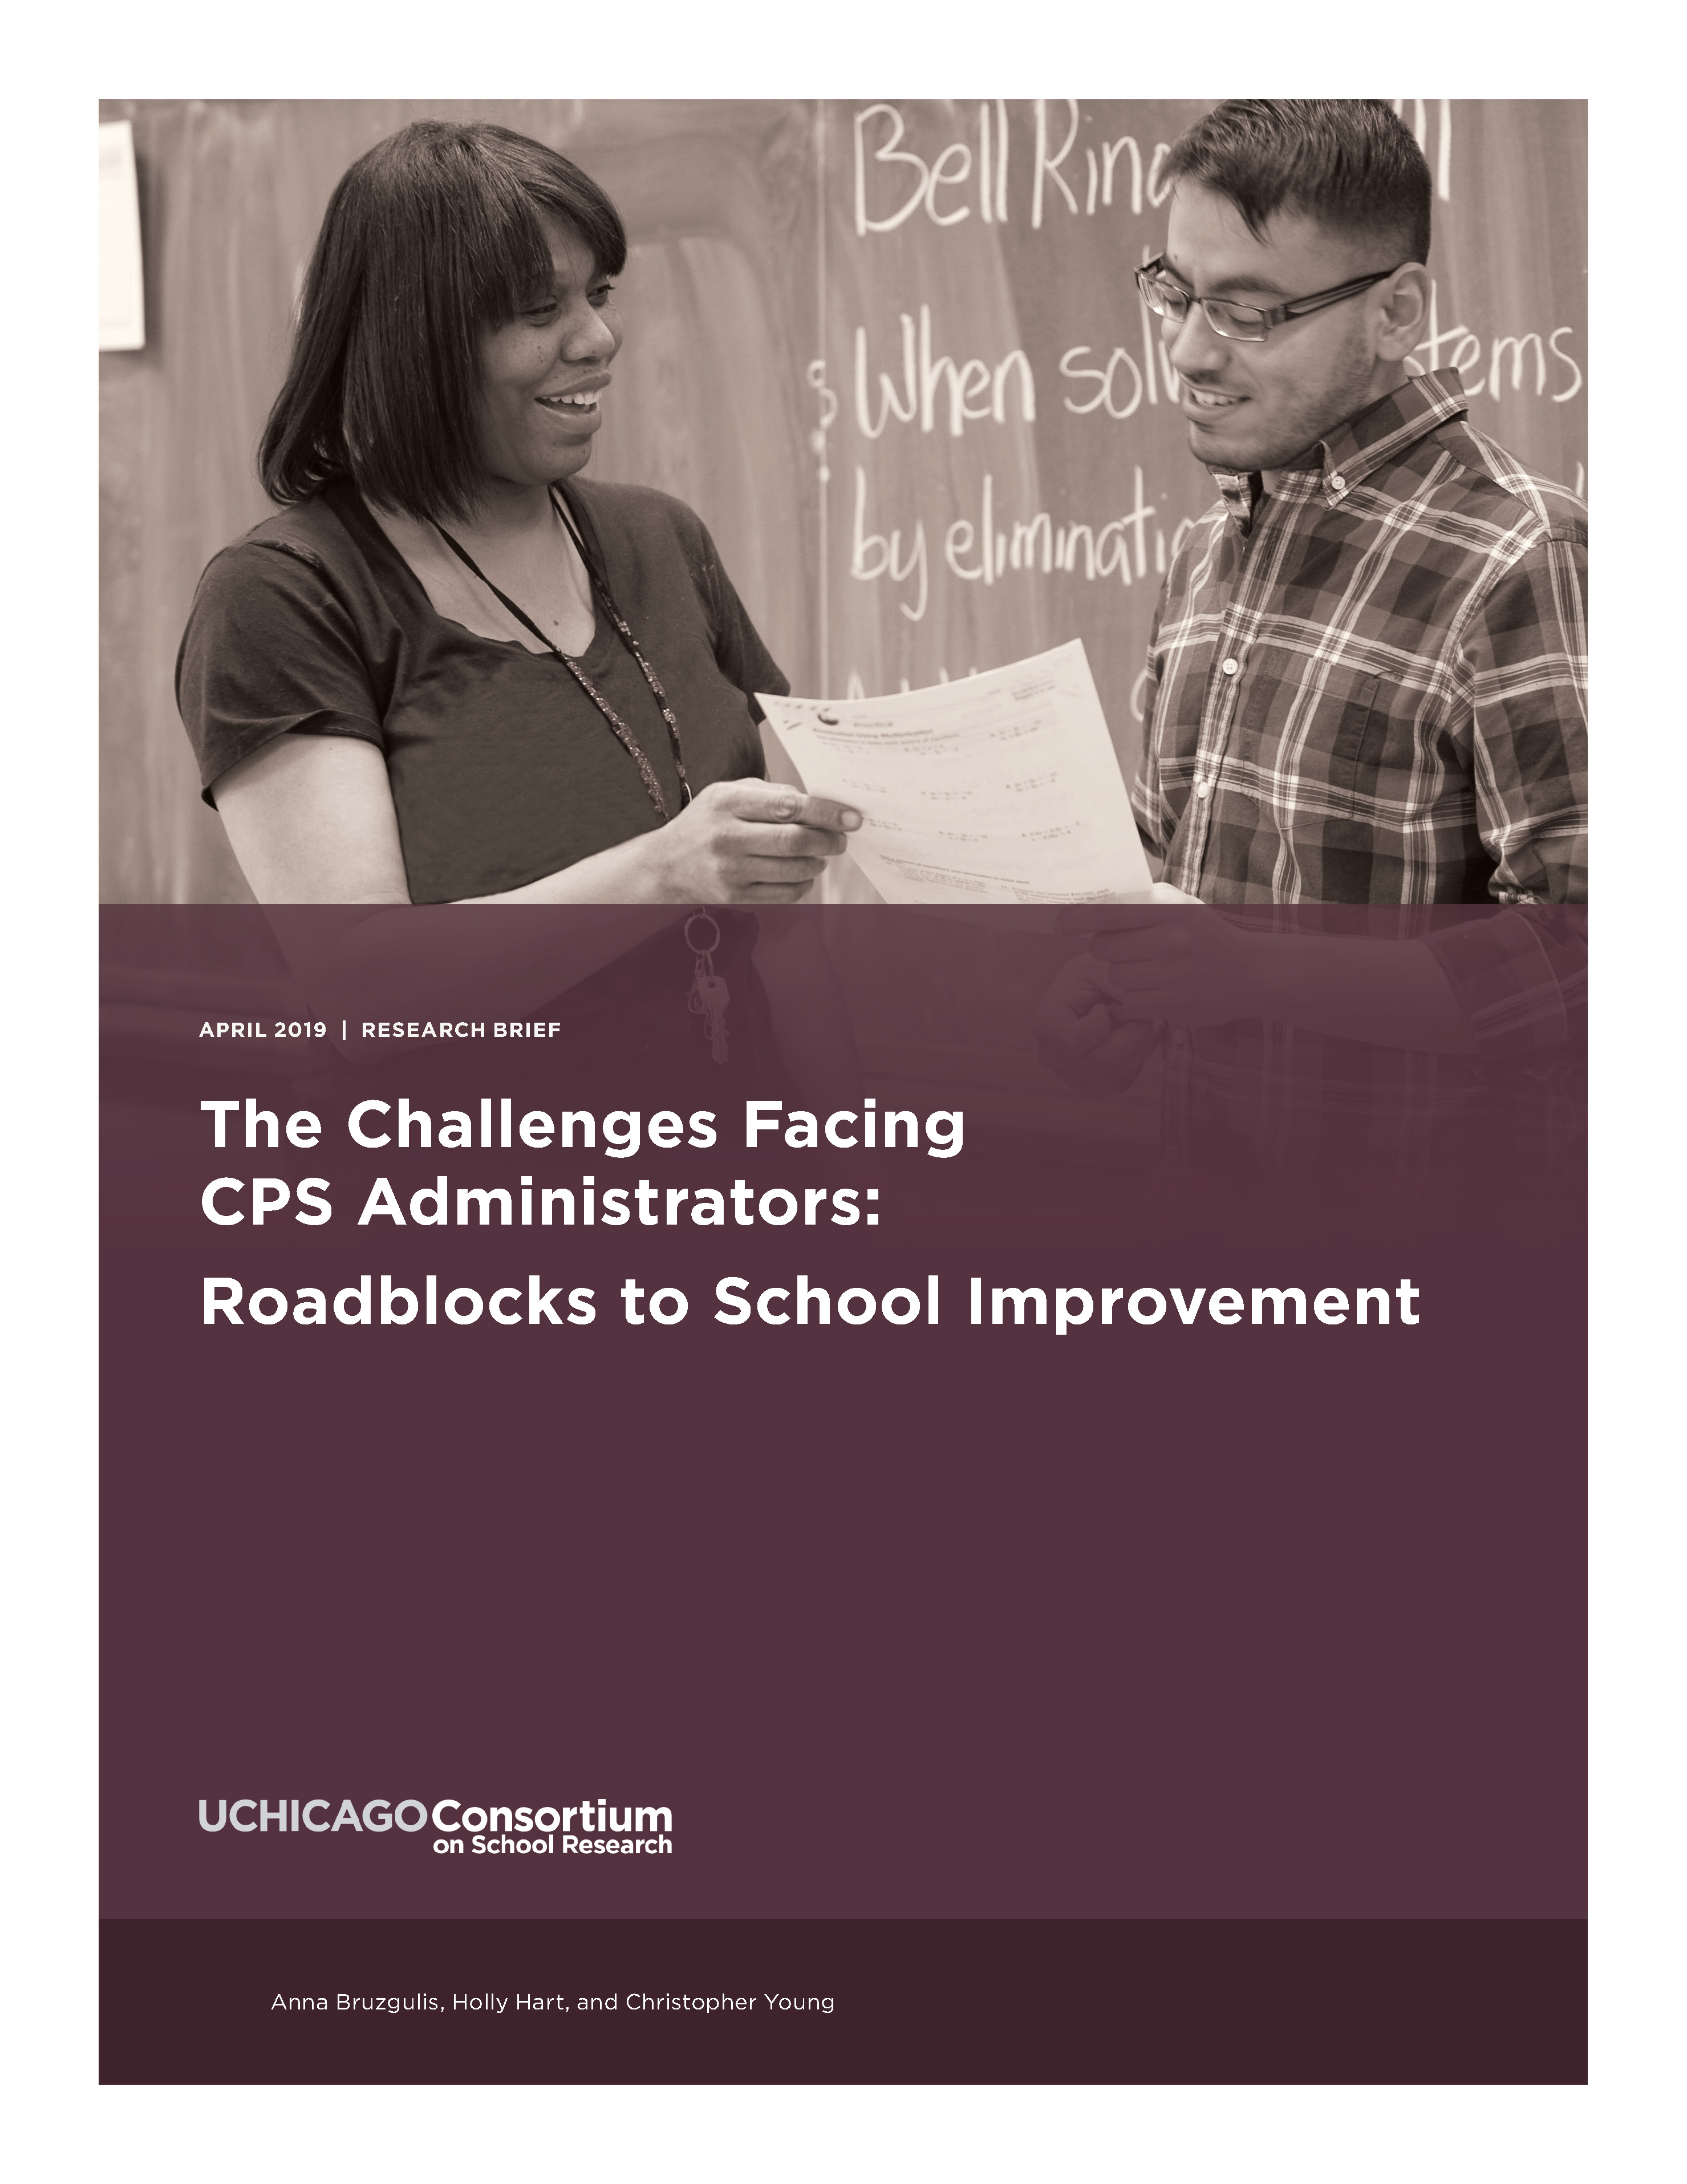 The Challenges Facing CPS Administrators: Roadblocks to School Improvement